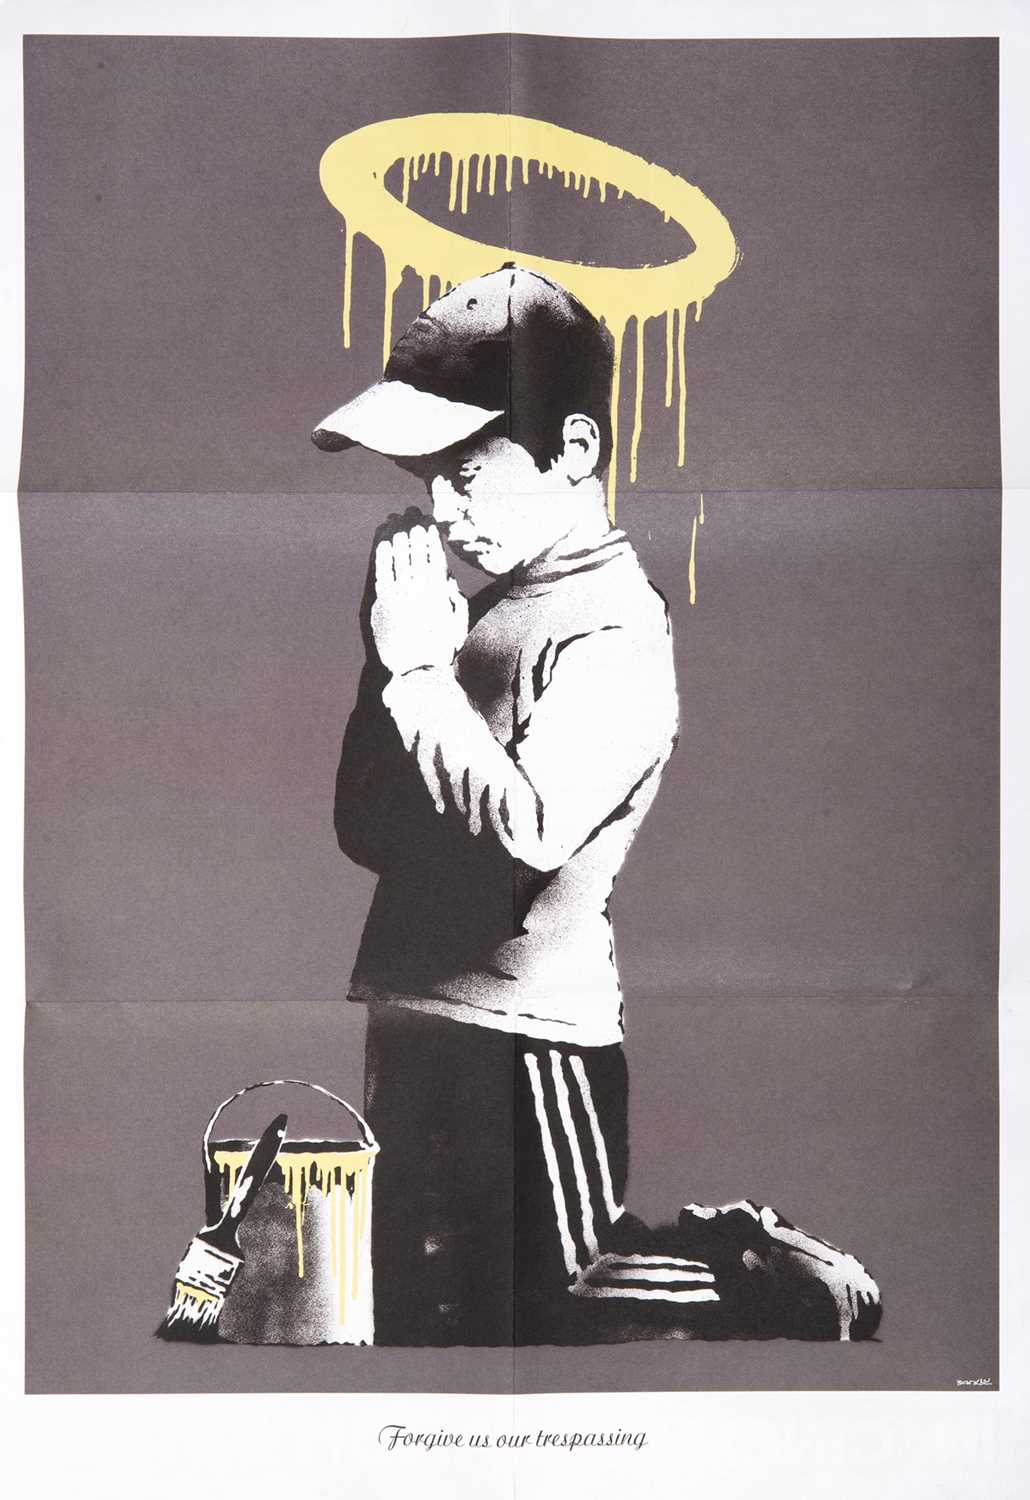 Lot 64 - Banksy (British 1974-), Forgive Us Our Trespassing’, 2010